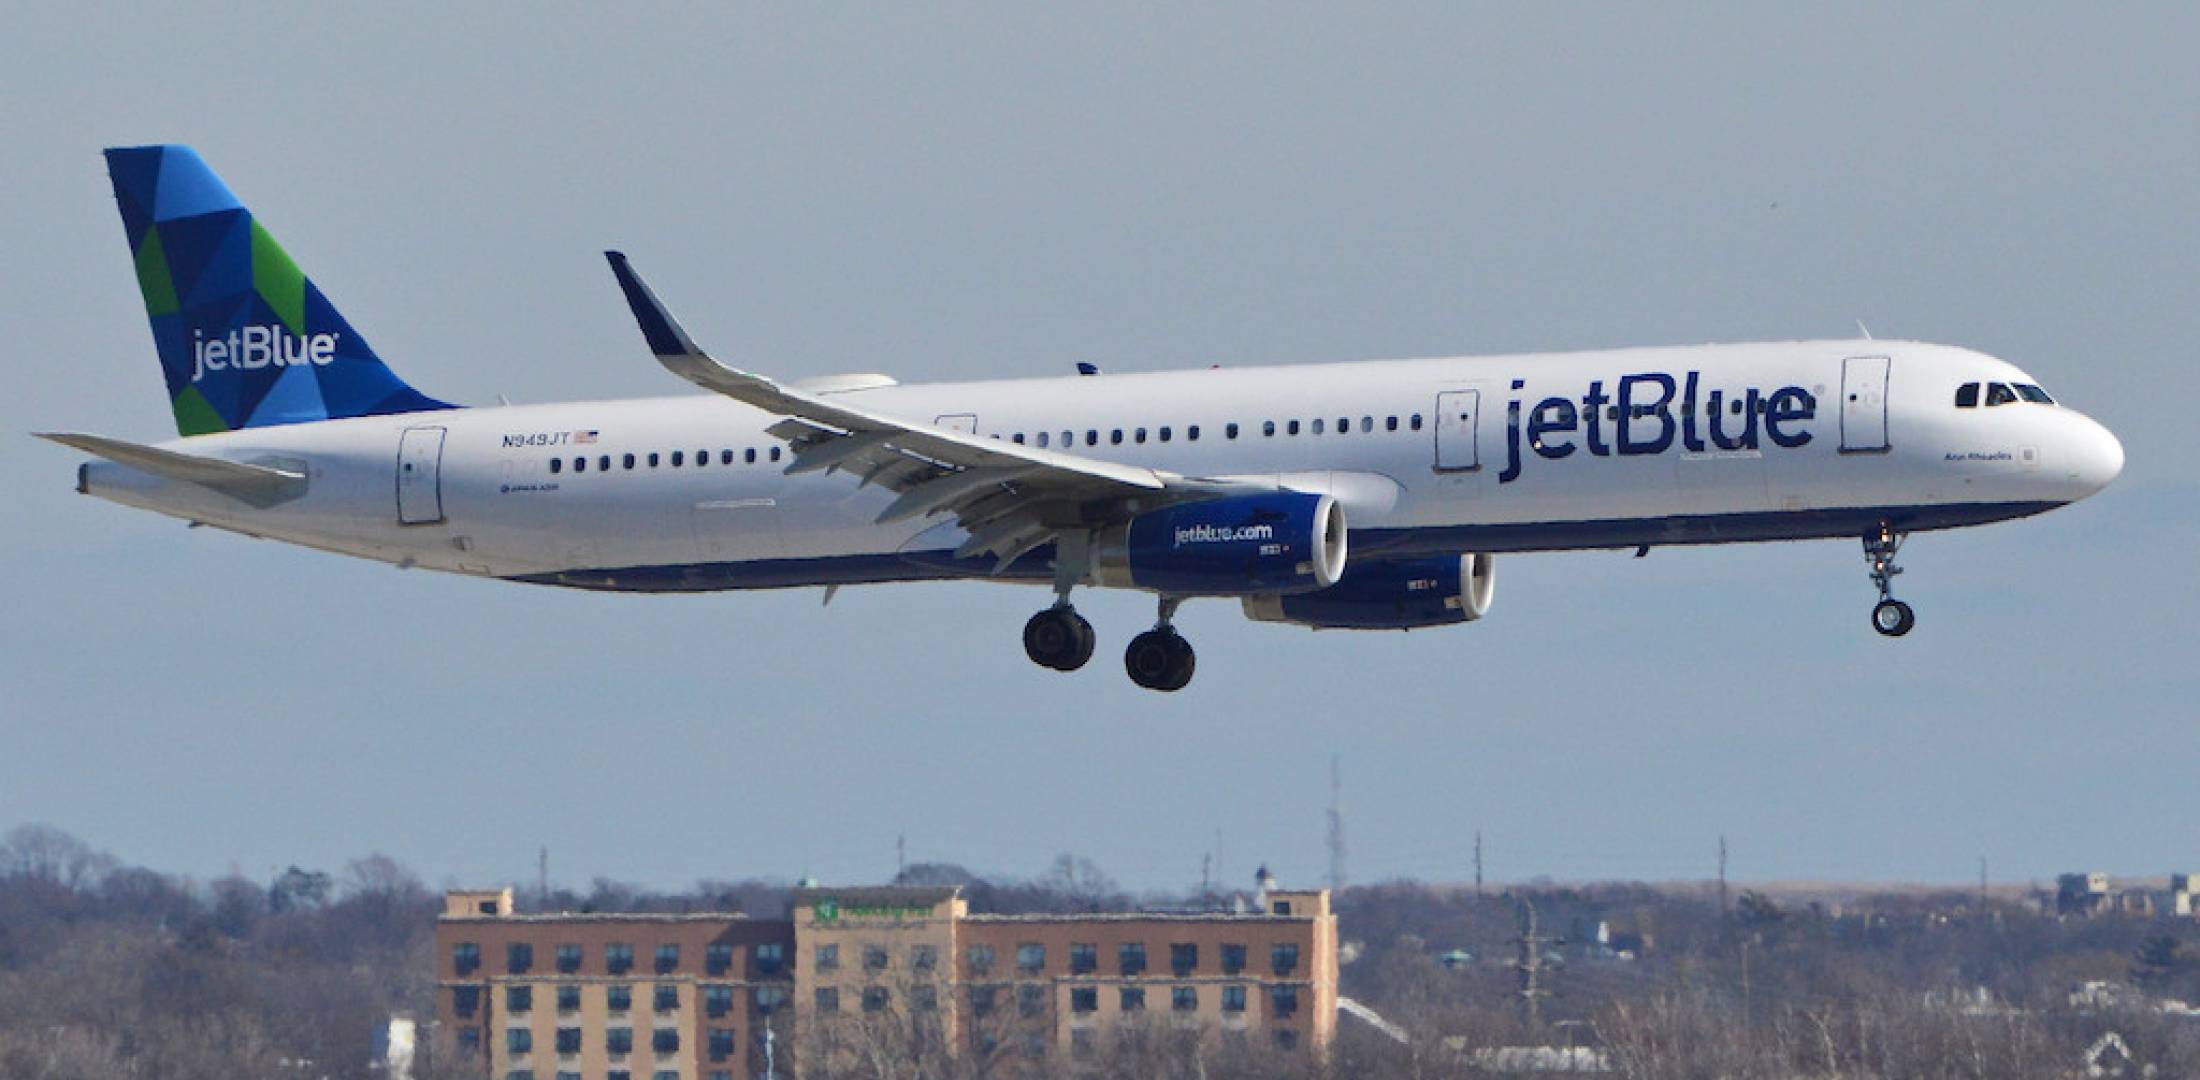 JetBlue Airbus A321 prepares to land at New York JFK Airport